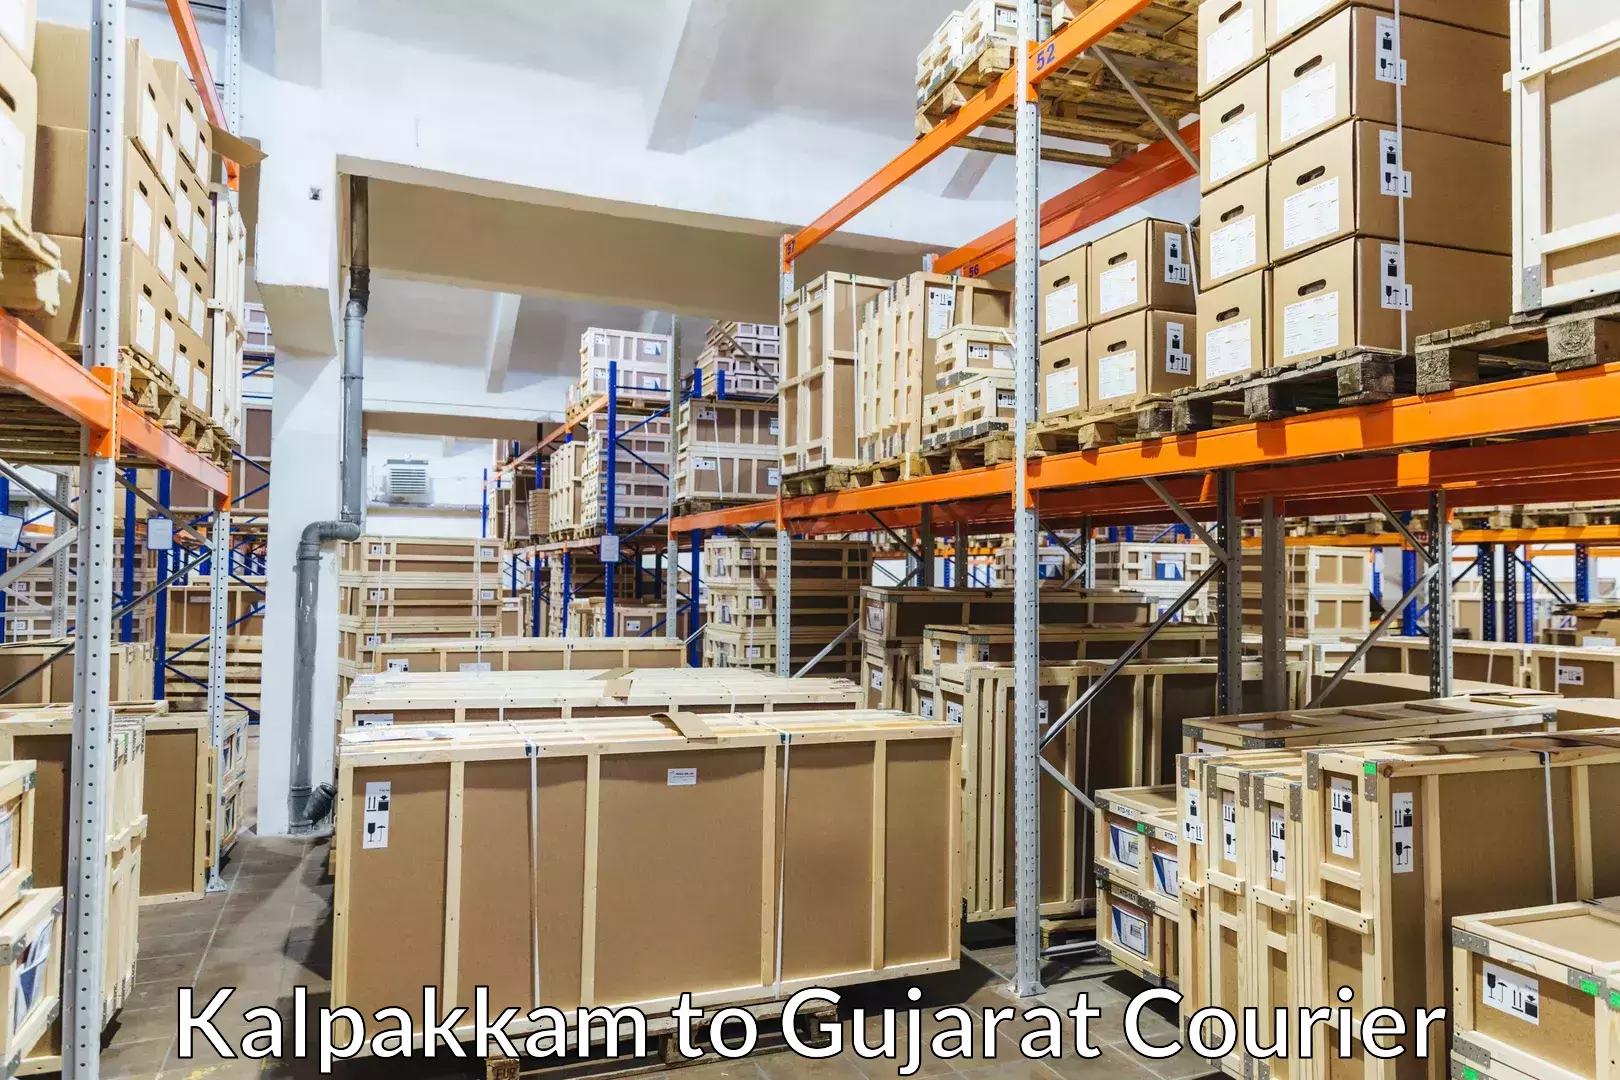 Luggage shipment specialists Kalpakkam to Gujarat